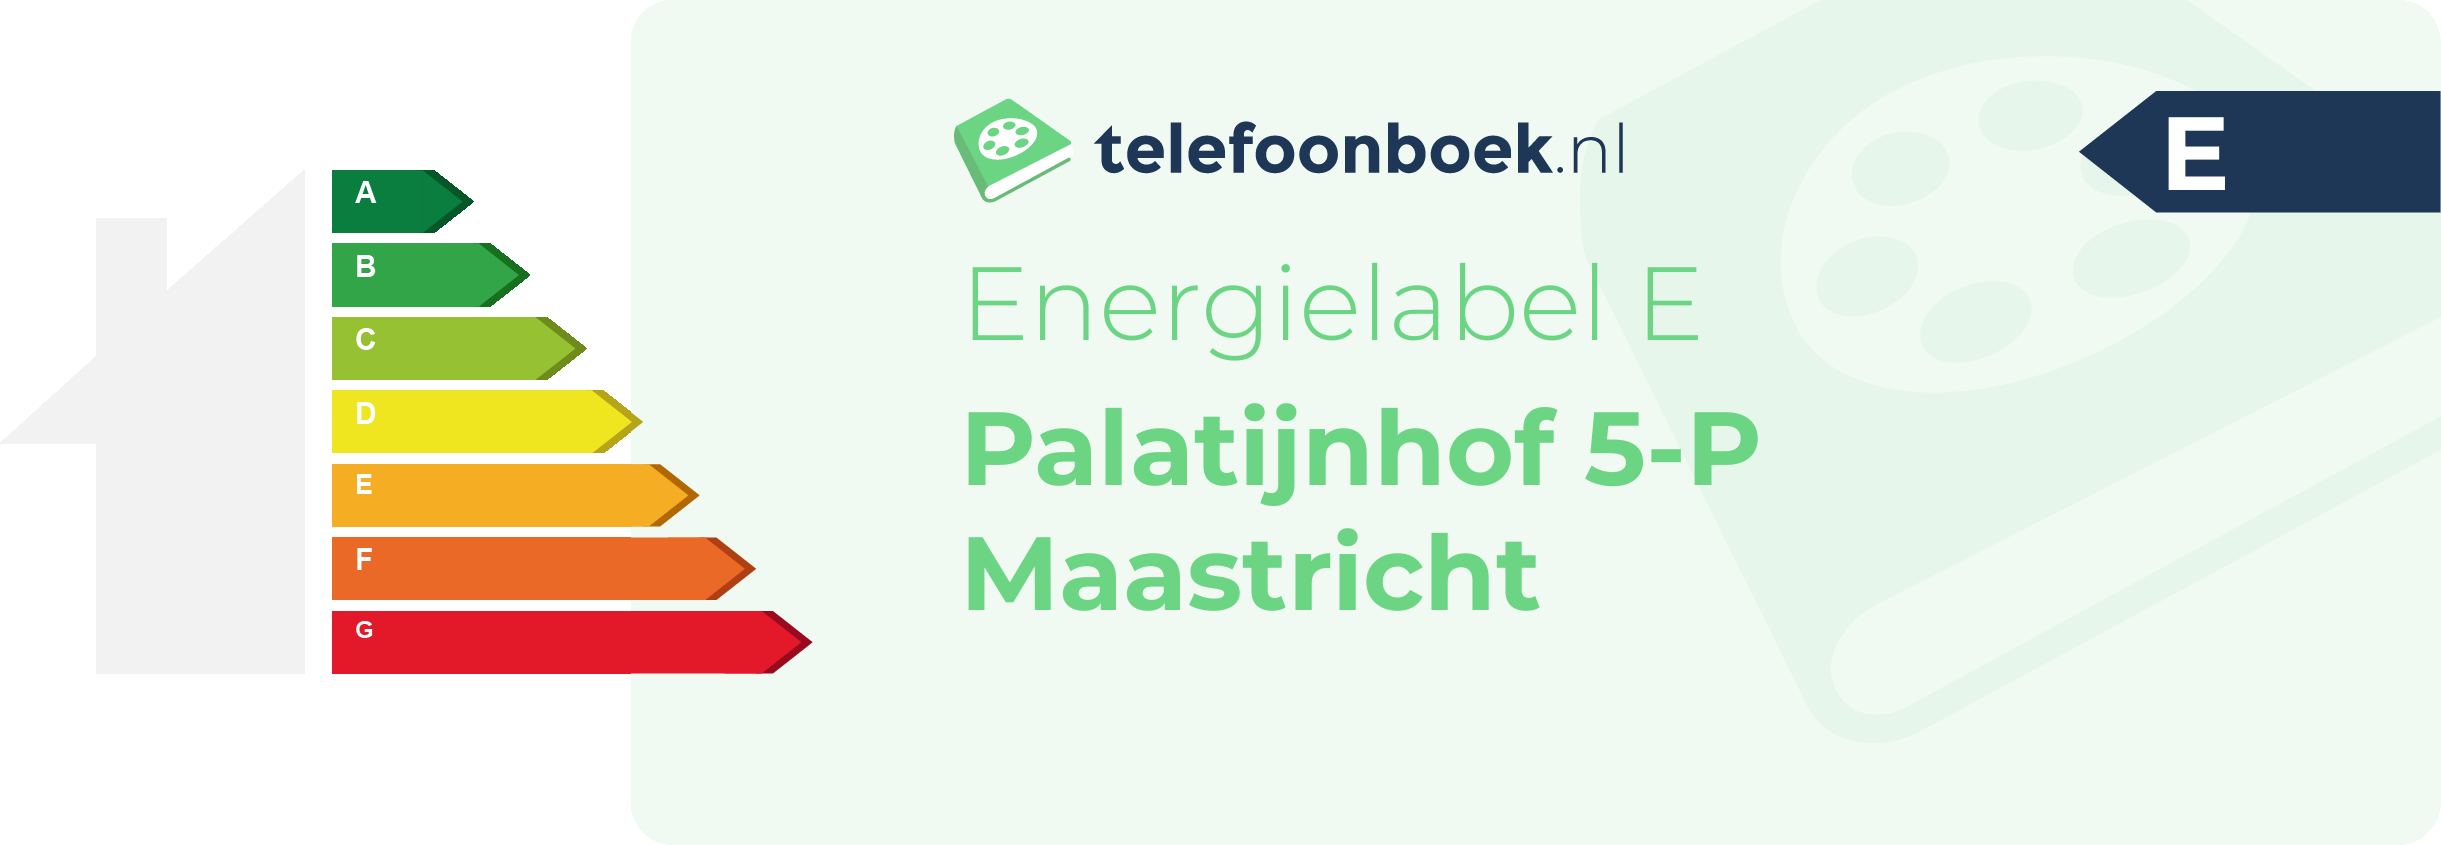 Energielabel Palatijnhof 5-P Maastricht